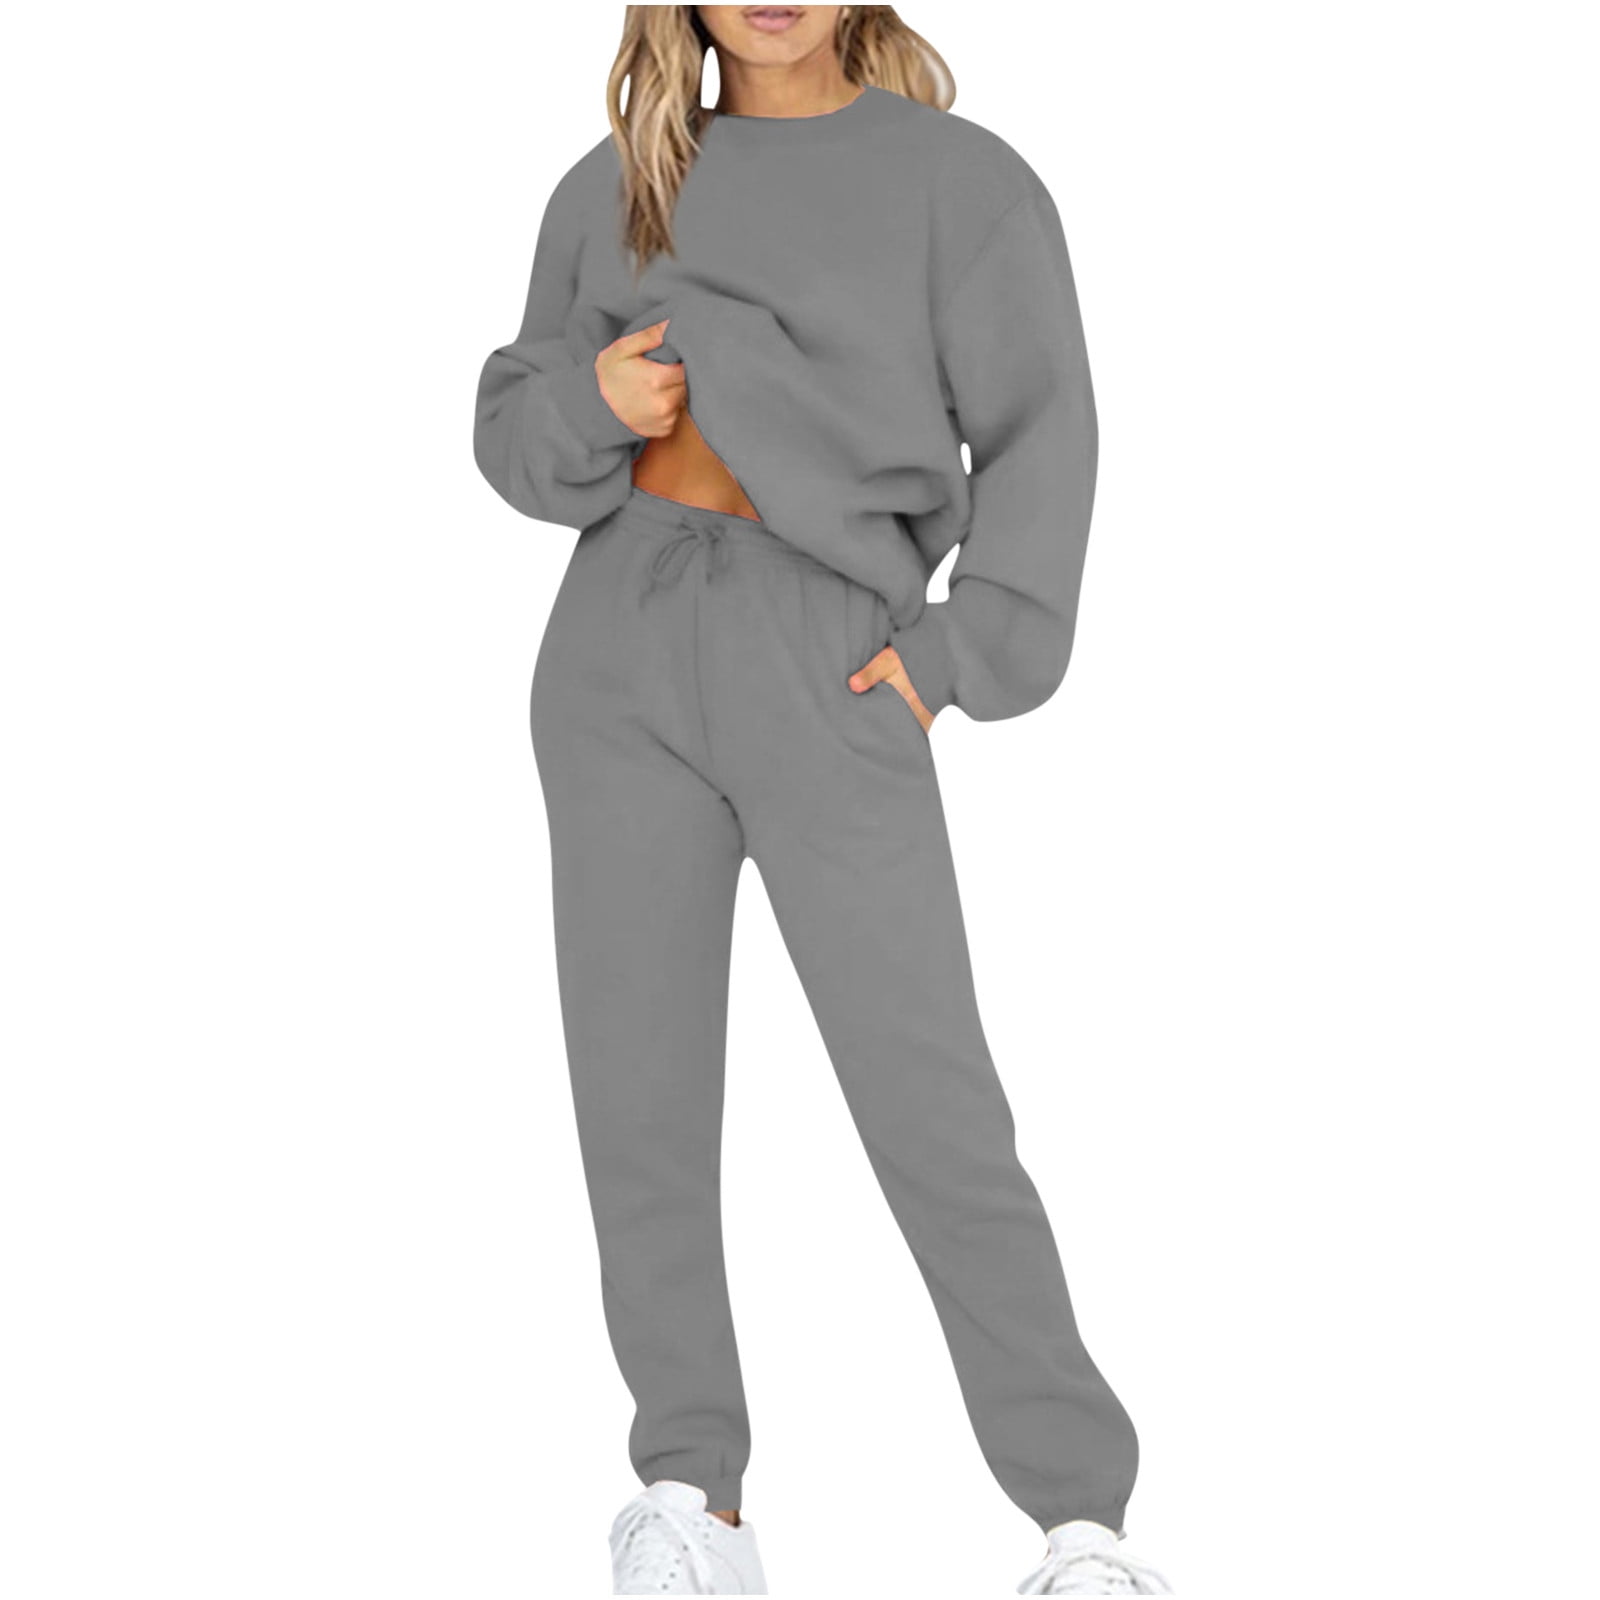 Grey Sweatsuit Sets, Sweatshirt & Sweatpant Sets